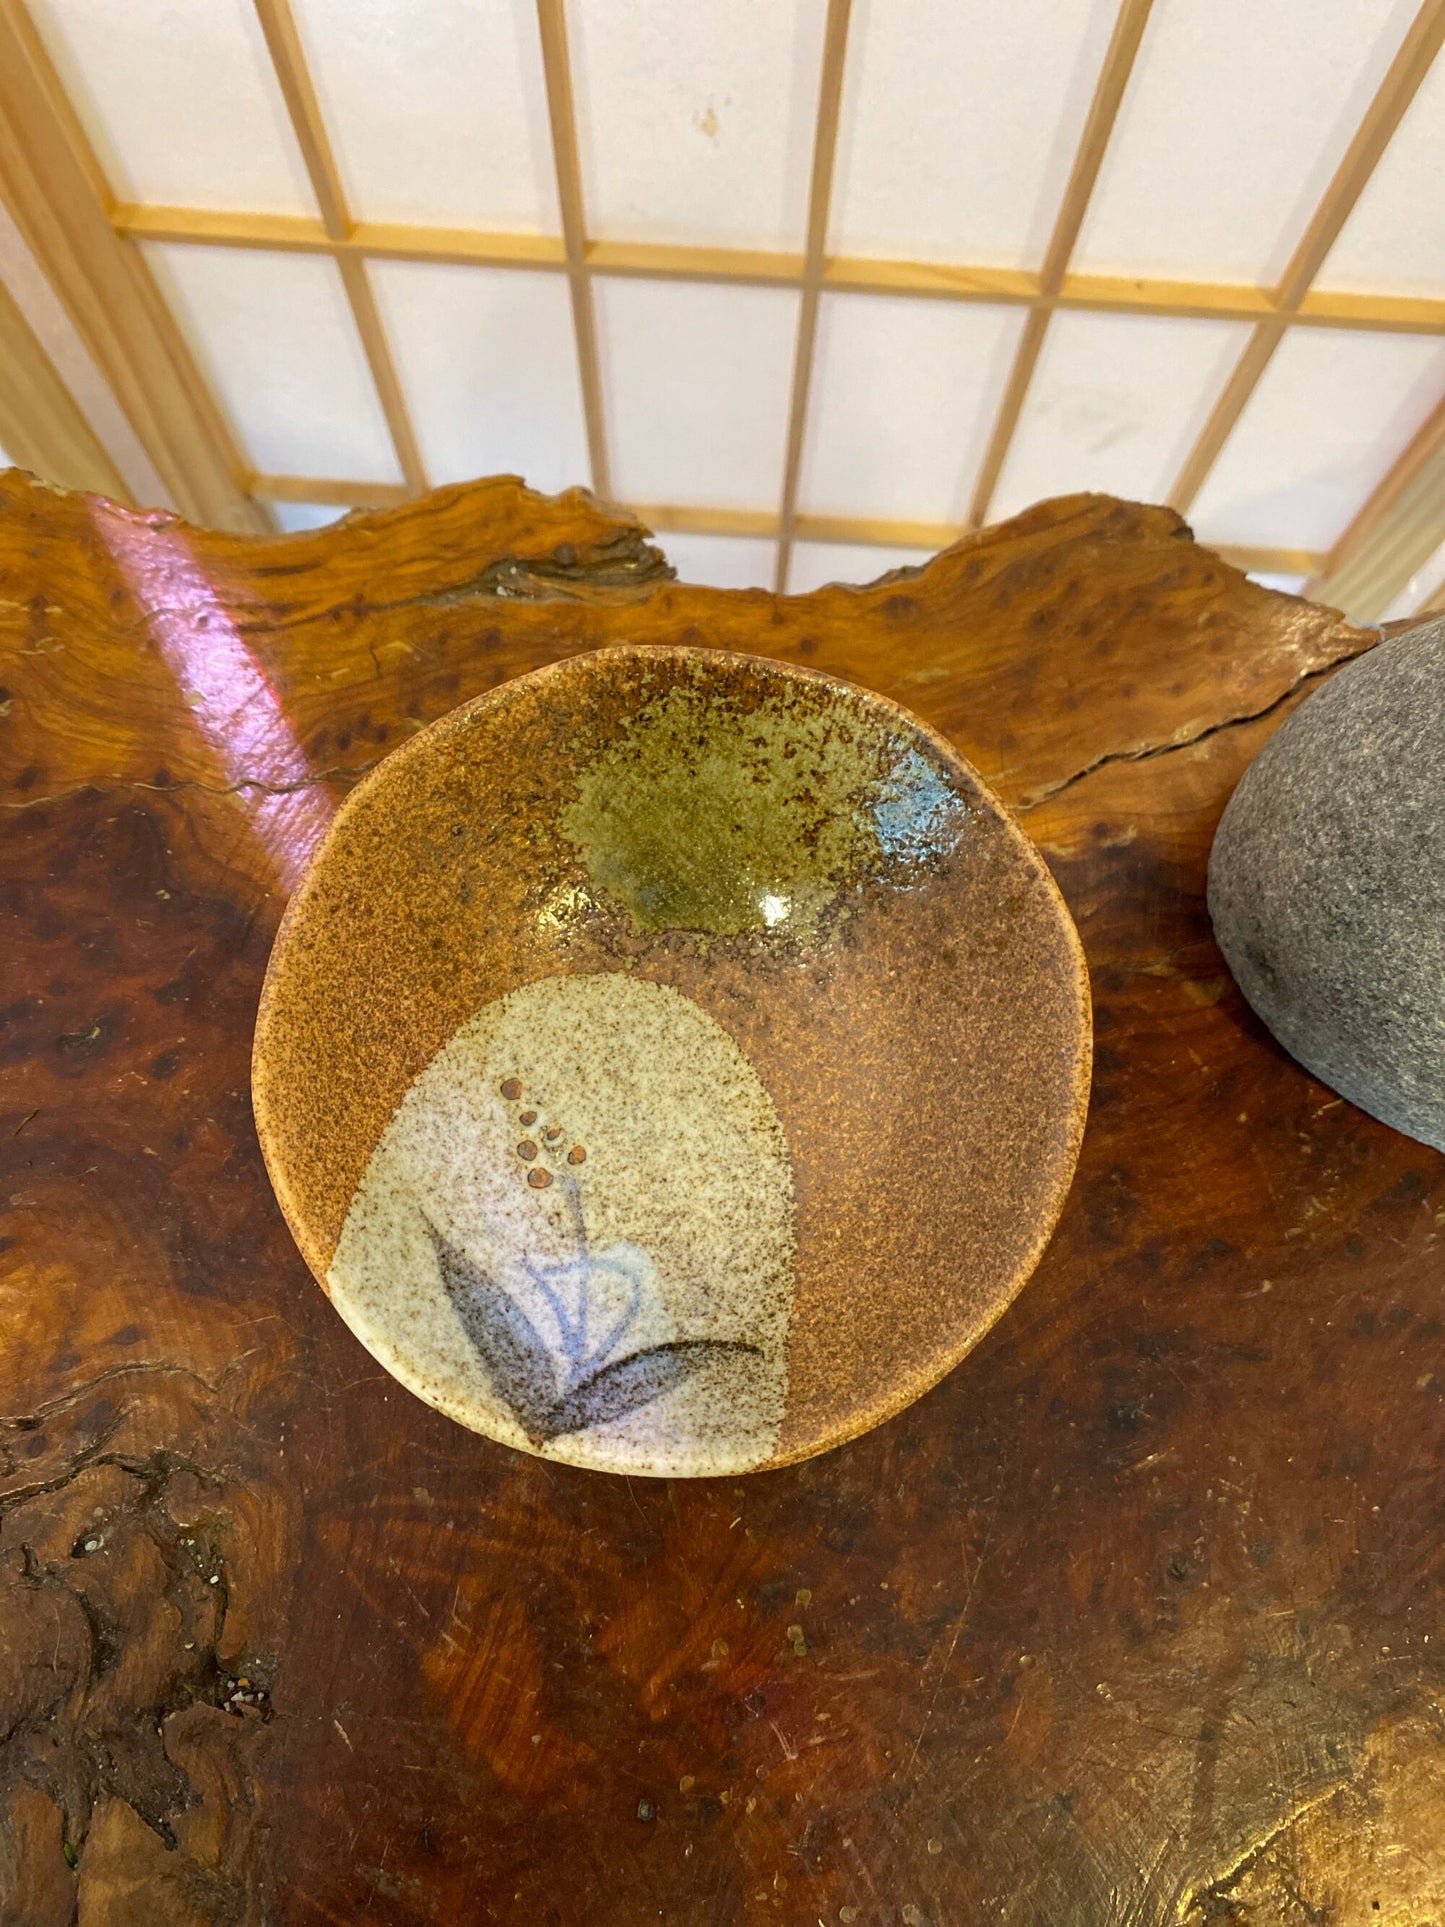 Small 4.5" dia x 1.5" ht 信楽焼Shigaraki ware 荒土Arado Japanese Ceramic bowl, Wafu, rustic style, natural soil color grazed with plant picture.